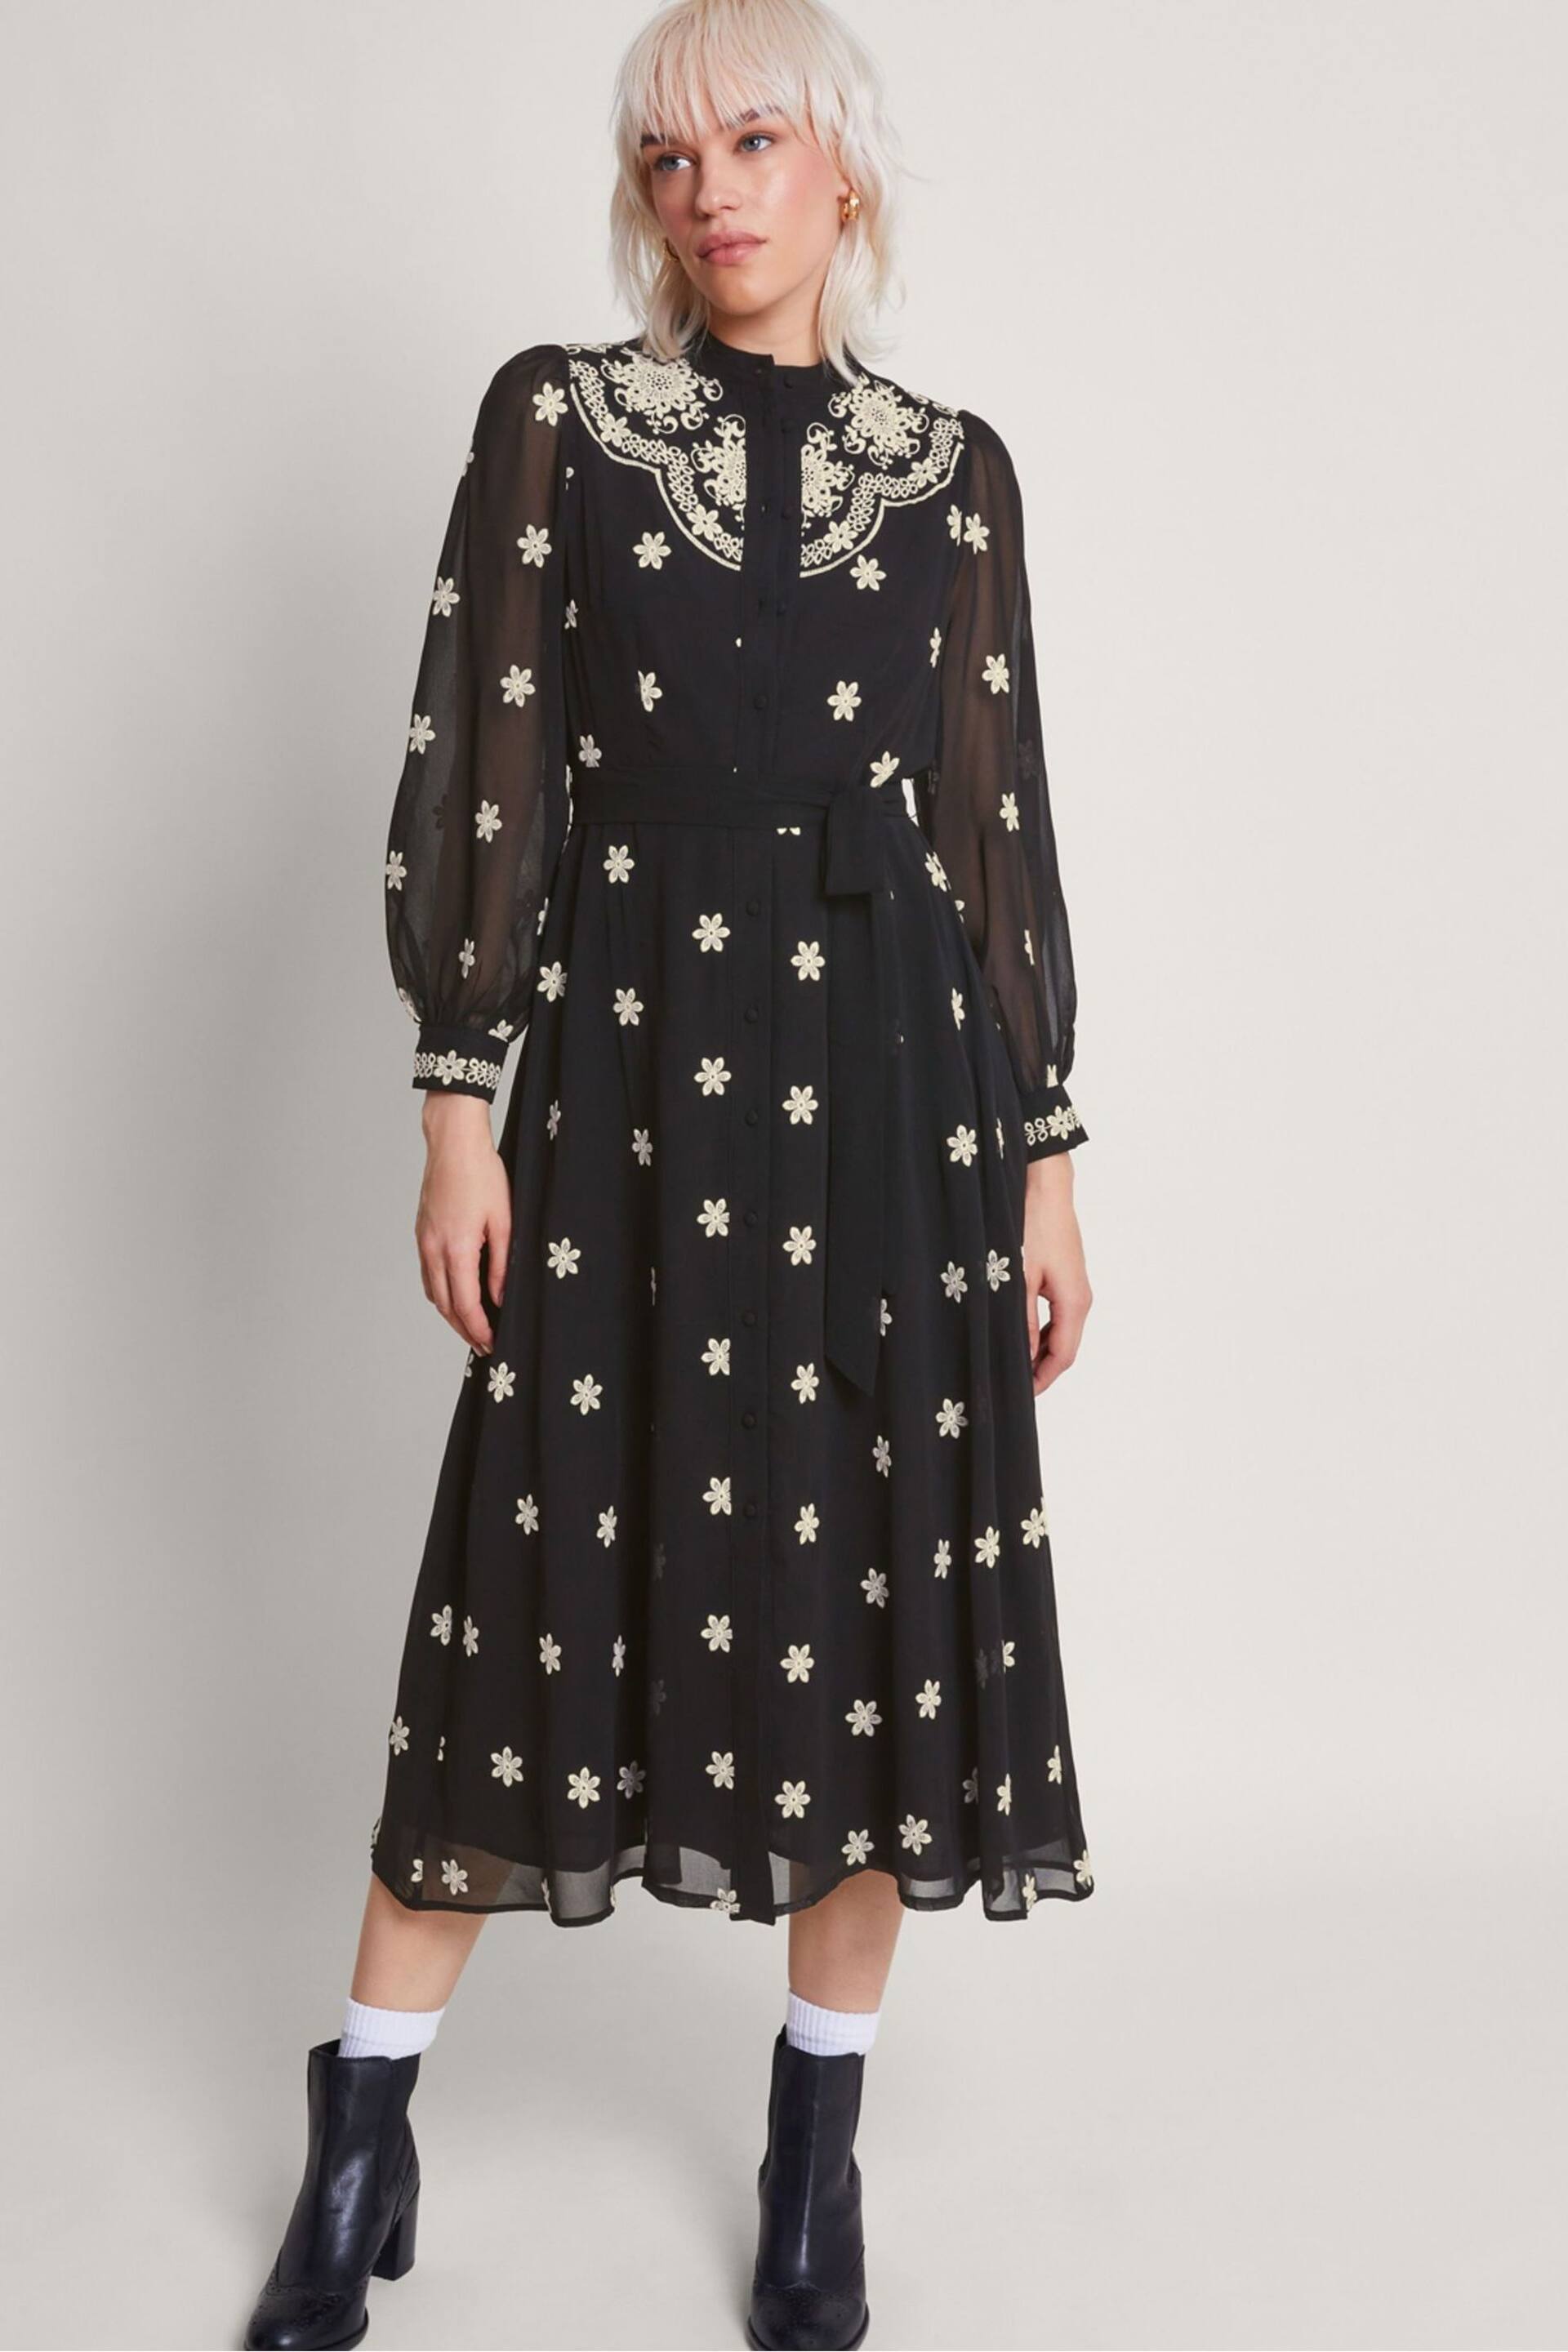 Monsoon Black Embroidered Fiori Shirt Dress - Image 1 of 5